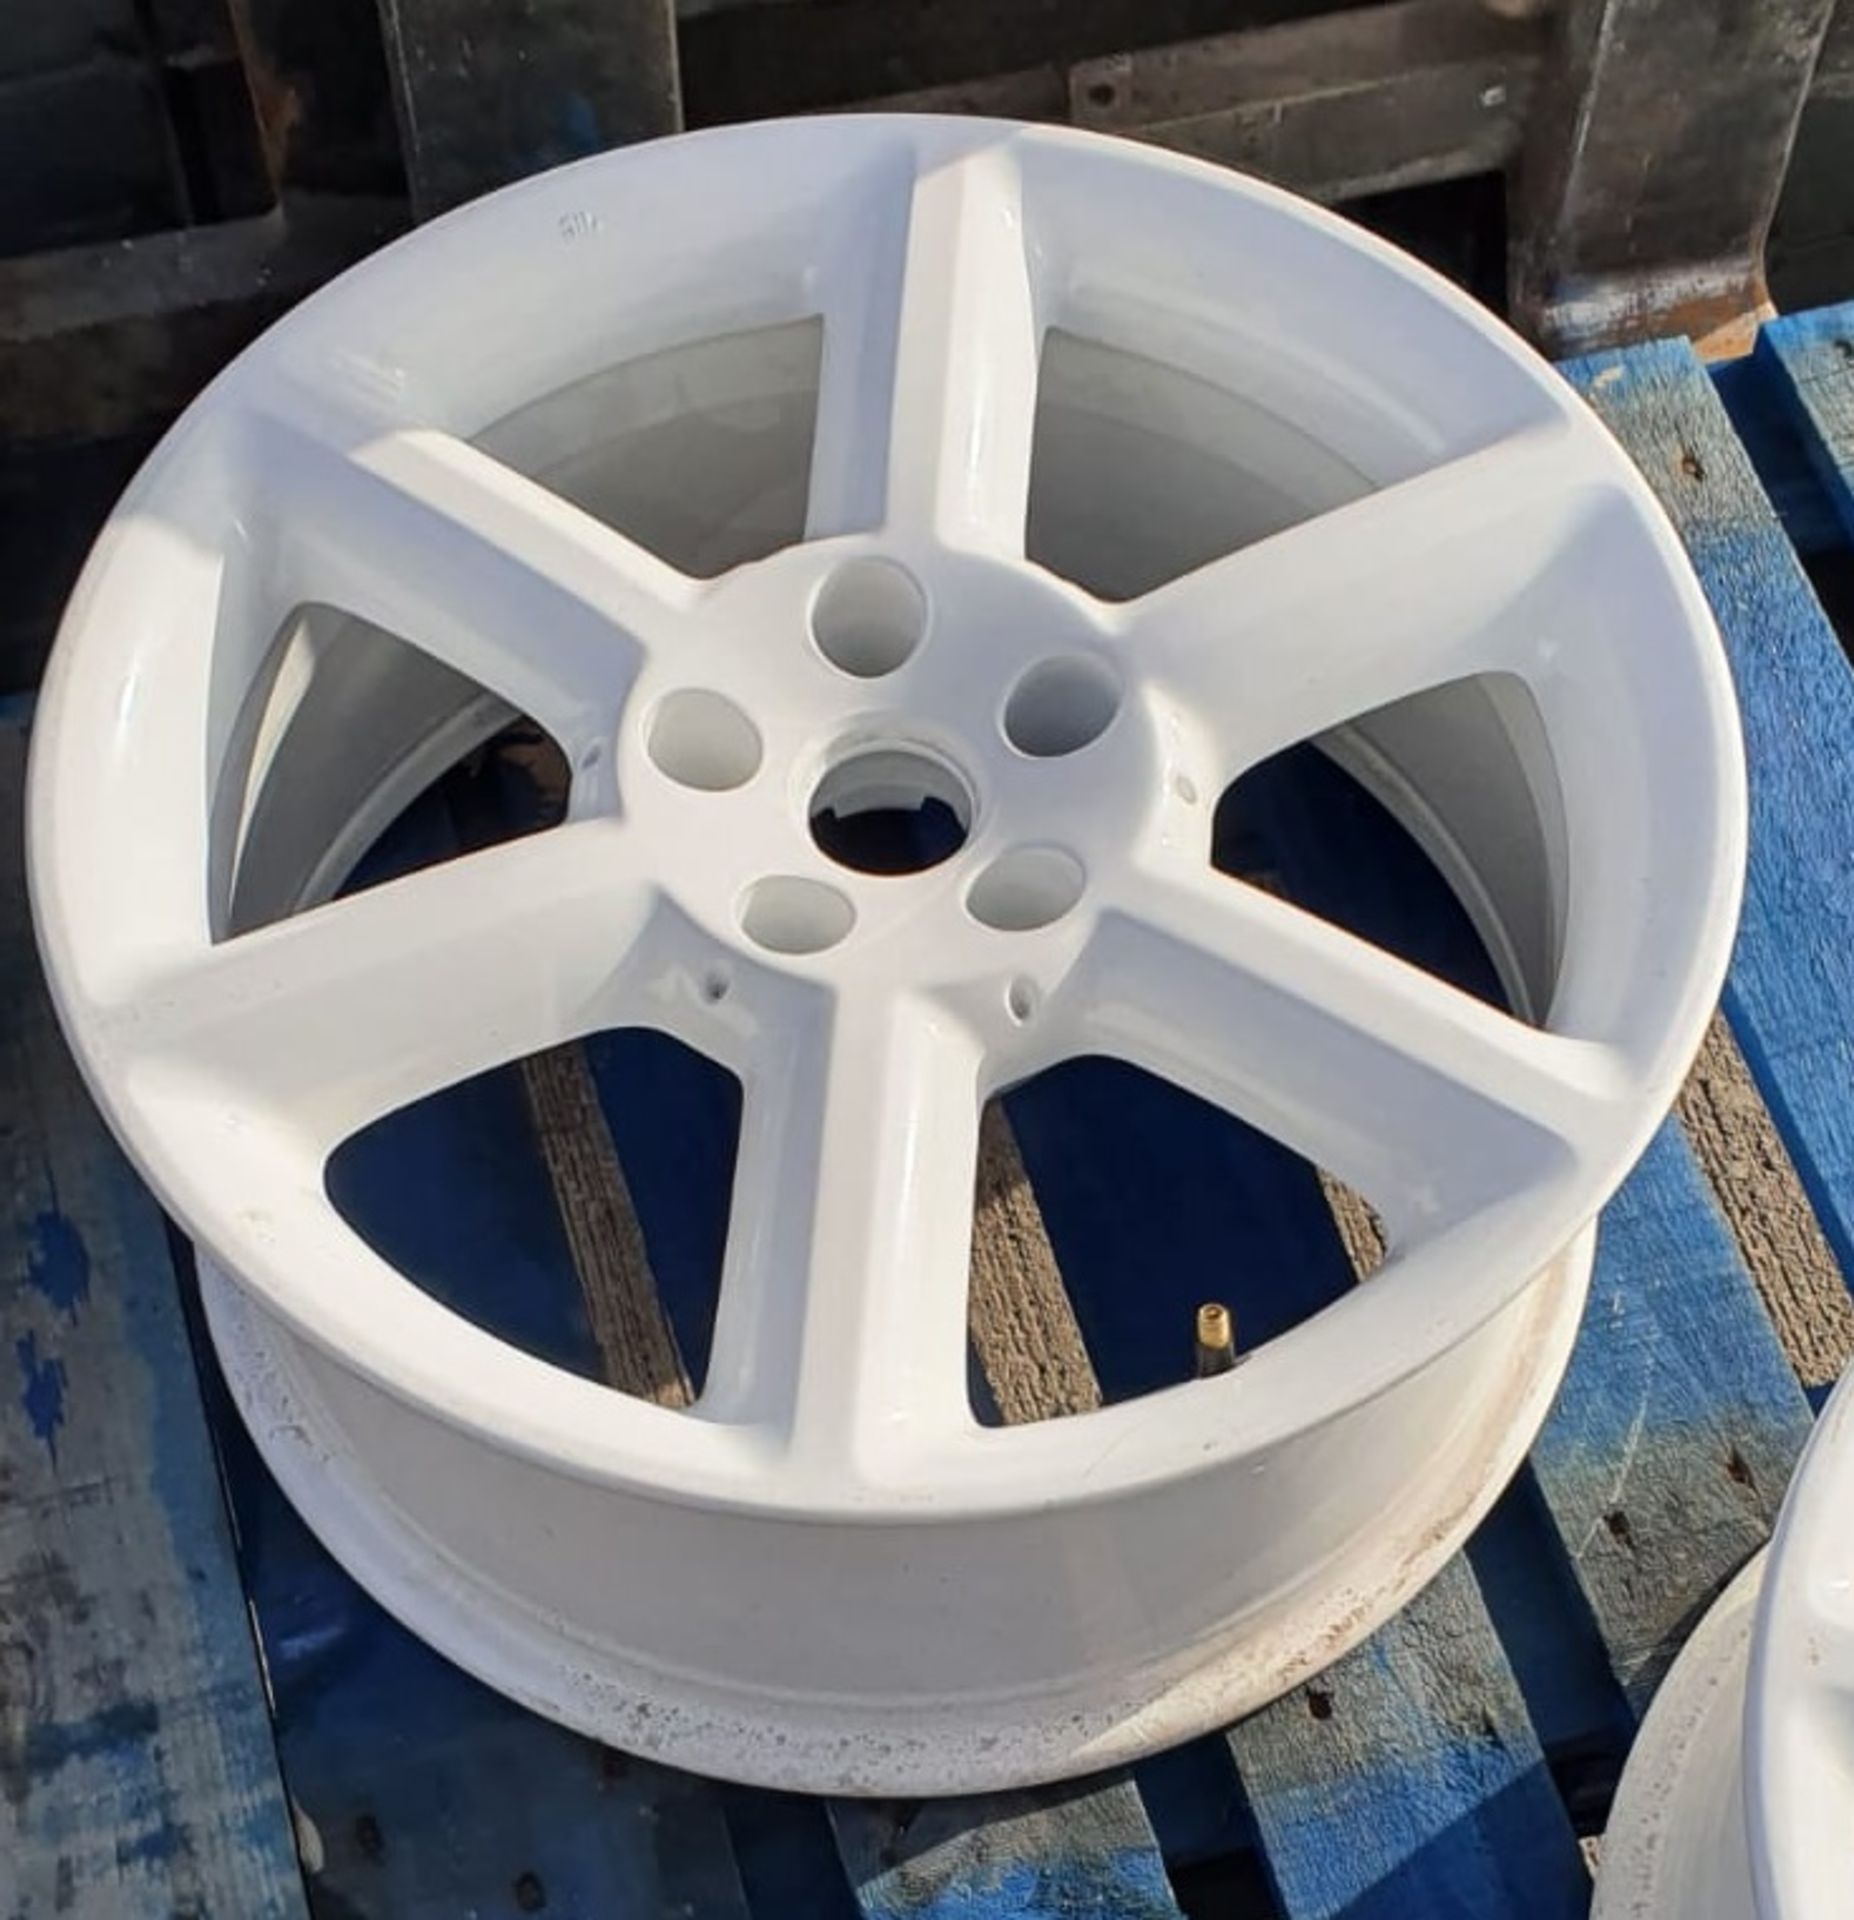 2 x Powder Coated 6-Spoke Car Wheel In White - Unused Boxed Stock - Image 2 of 5